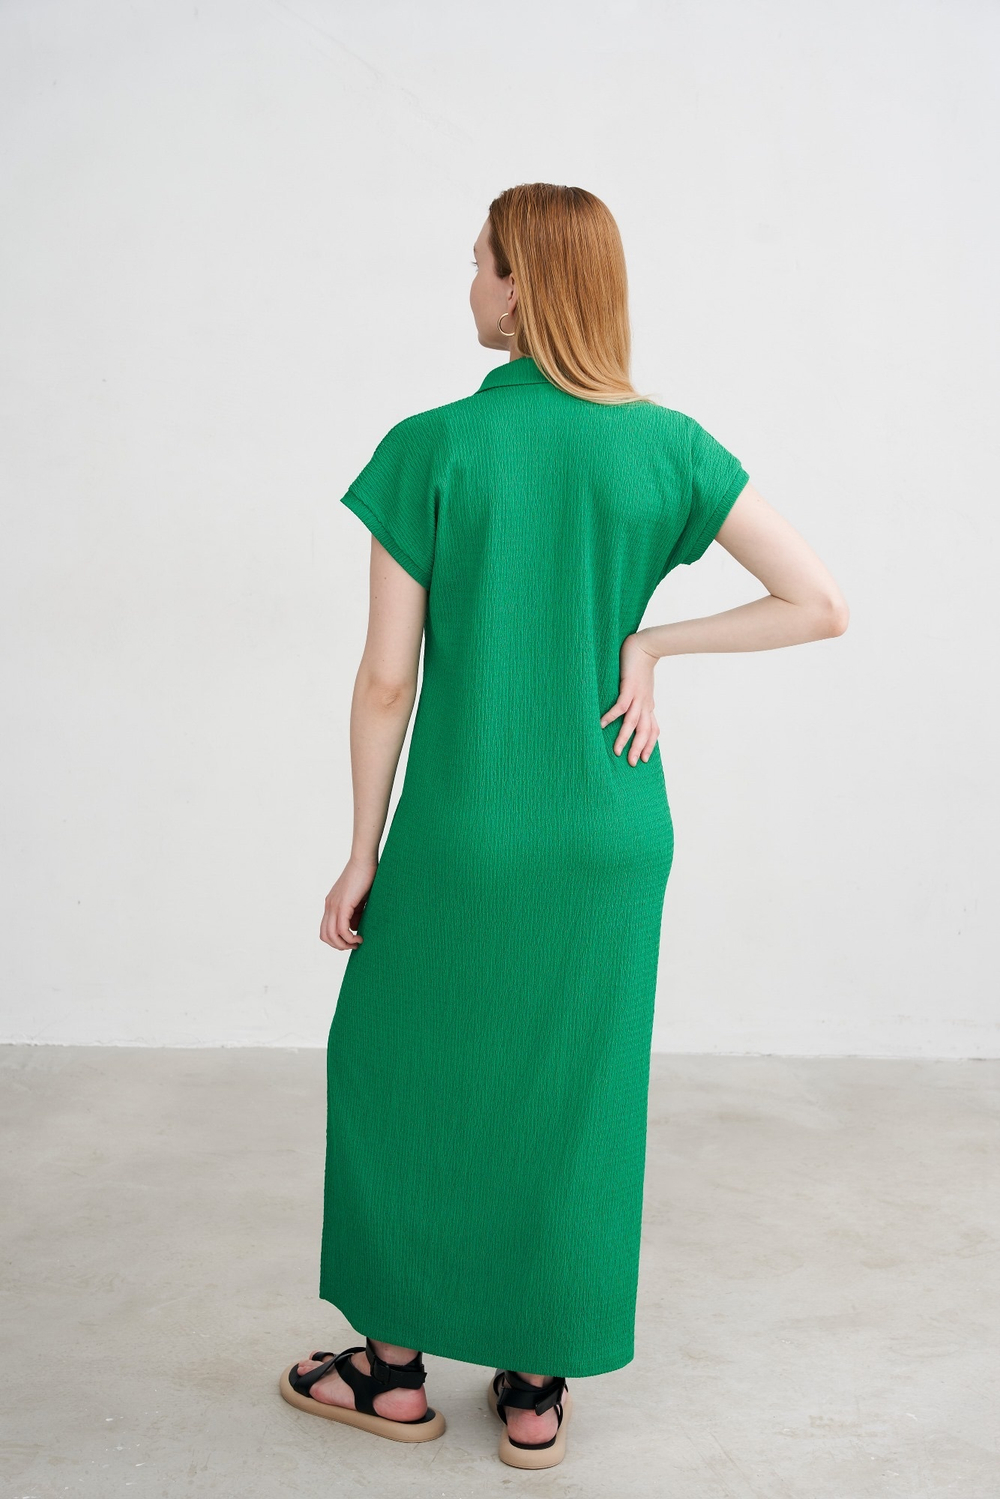 Зелёное платье с разрезом Тамбовчанка